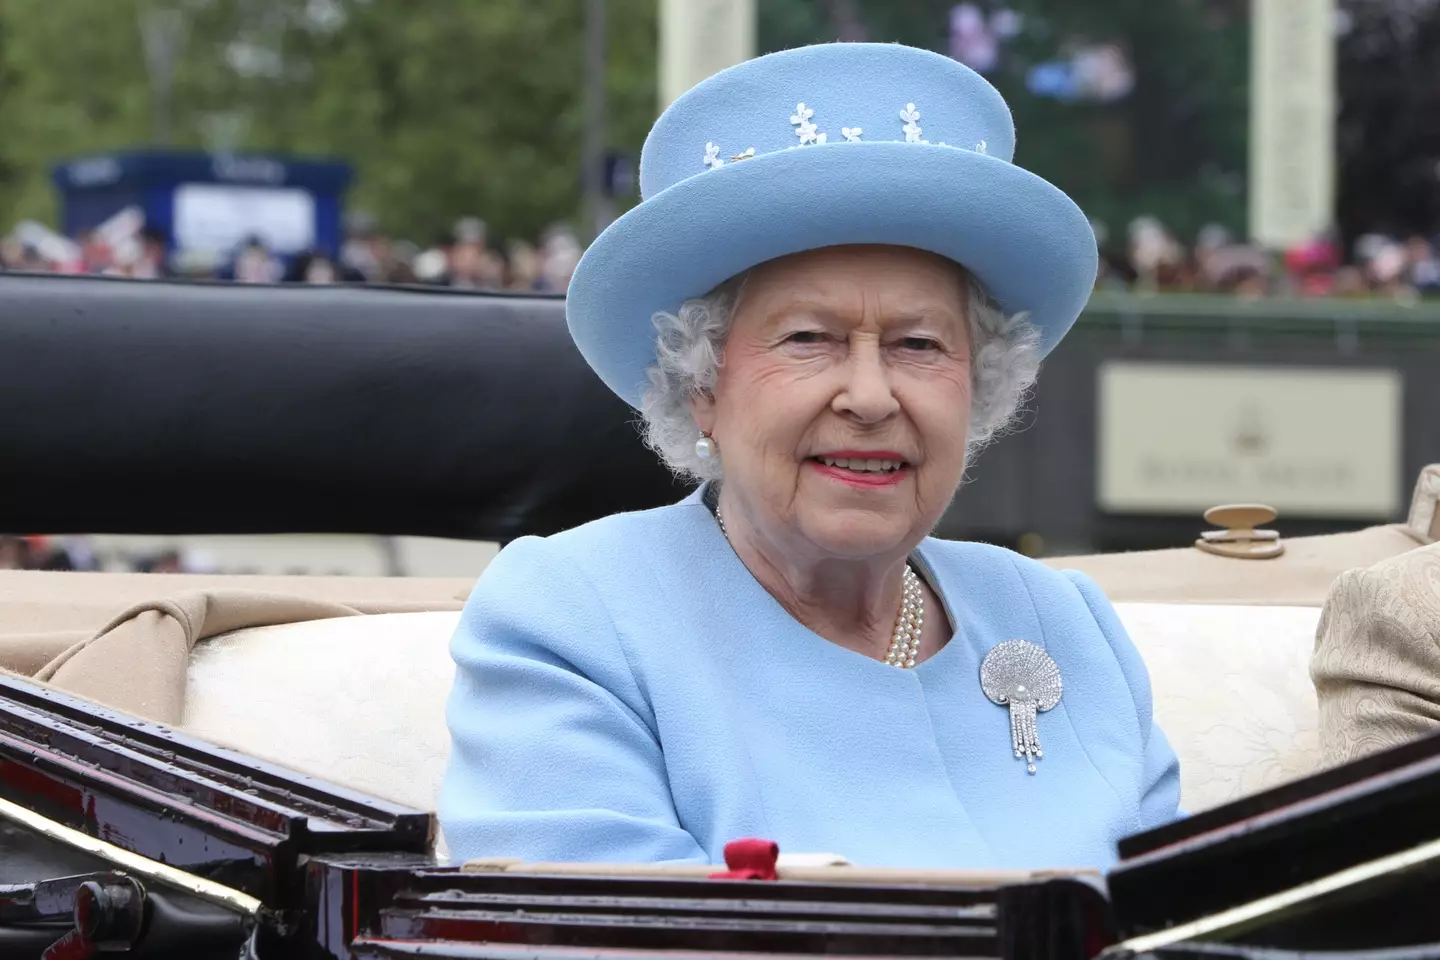 Queen Elizabeth II spent 70 years on the throne. (Image